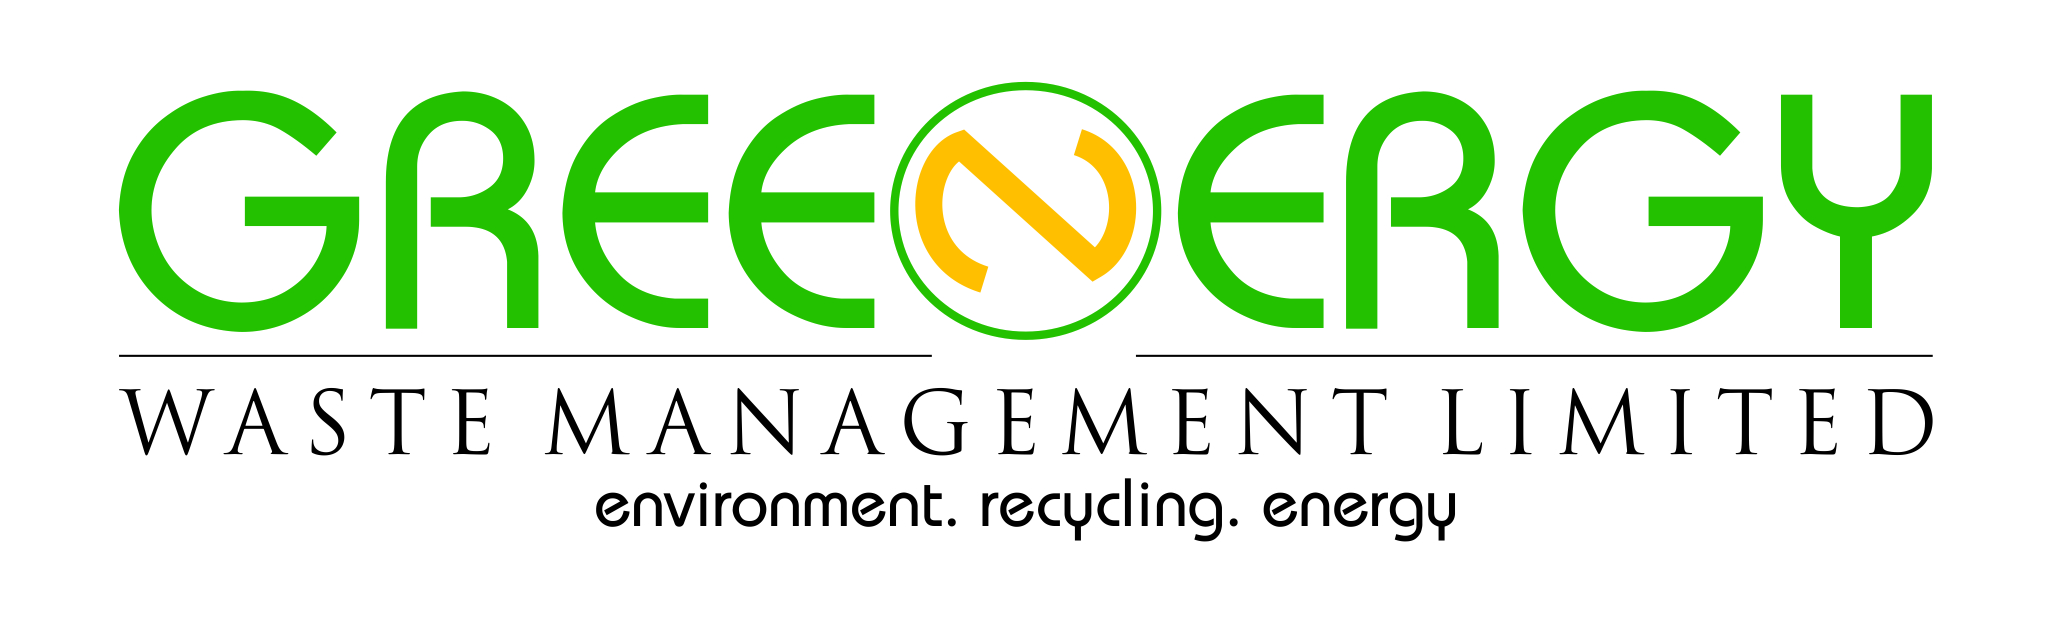 greenergy final logo